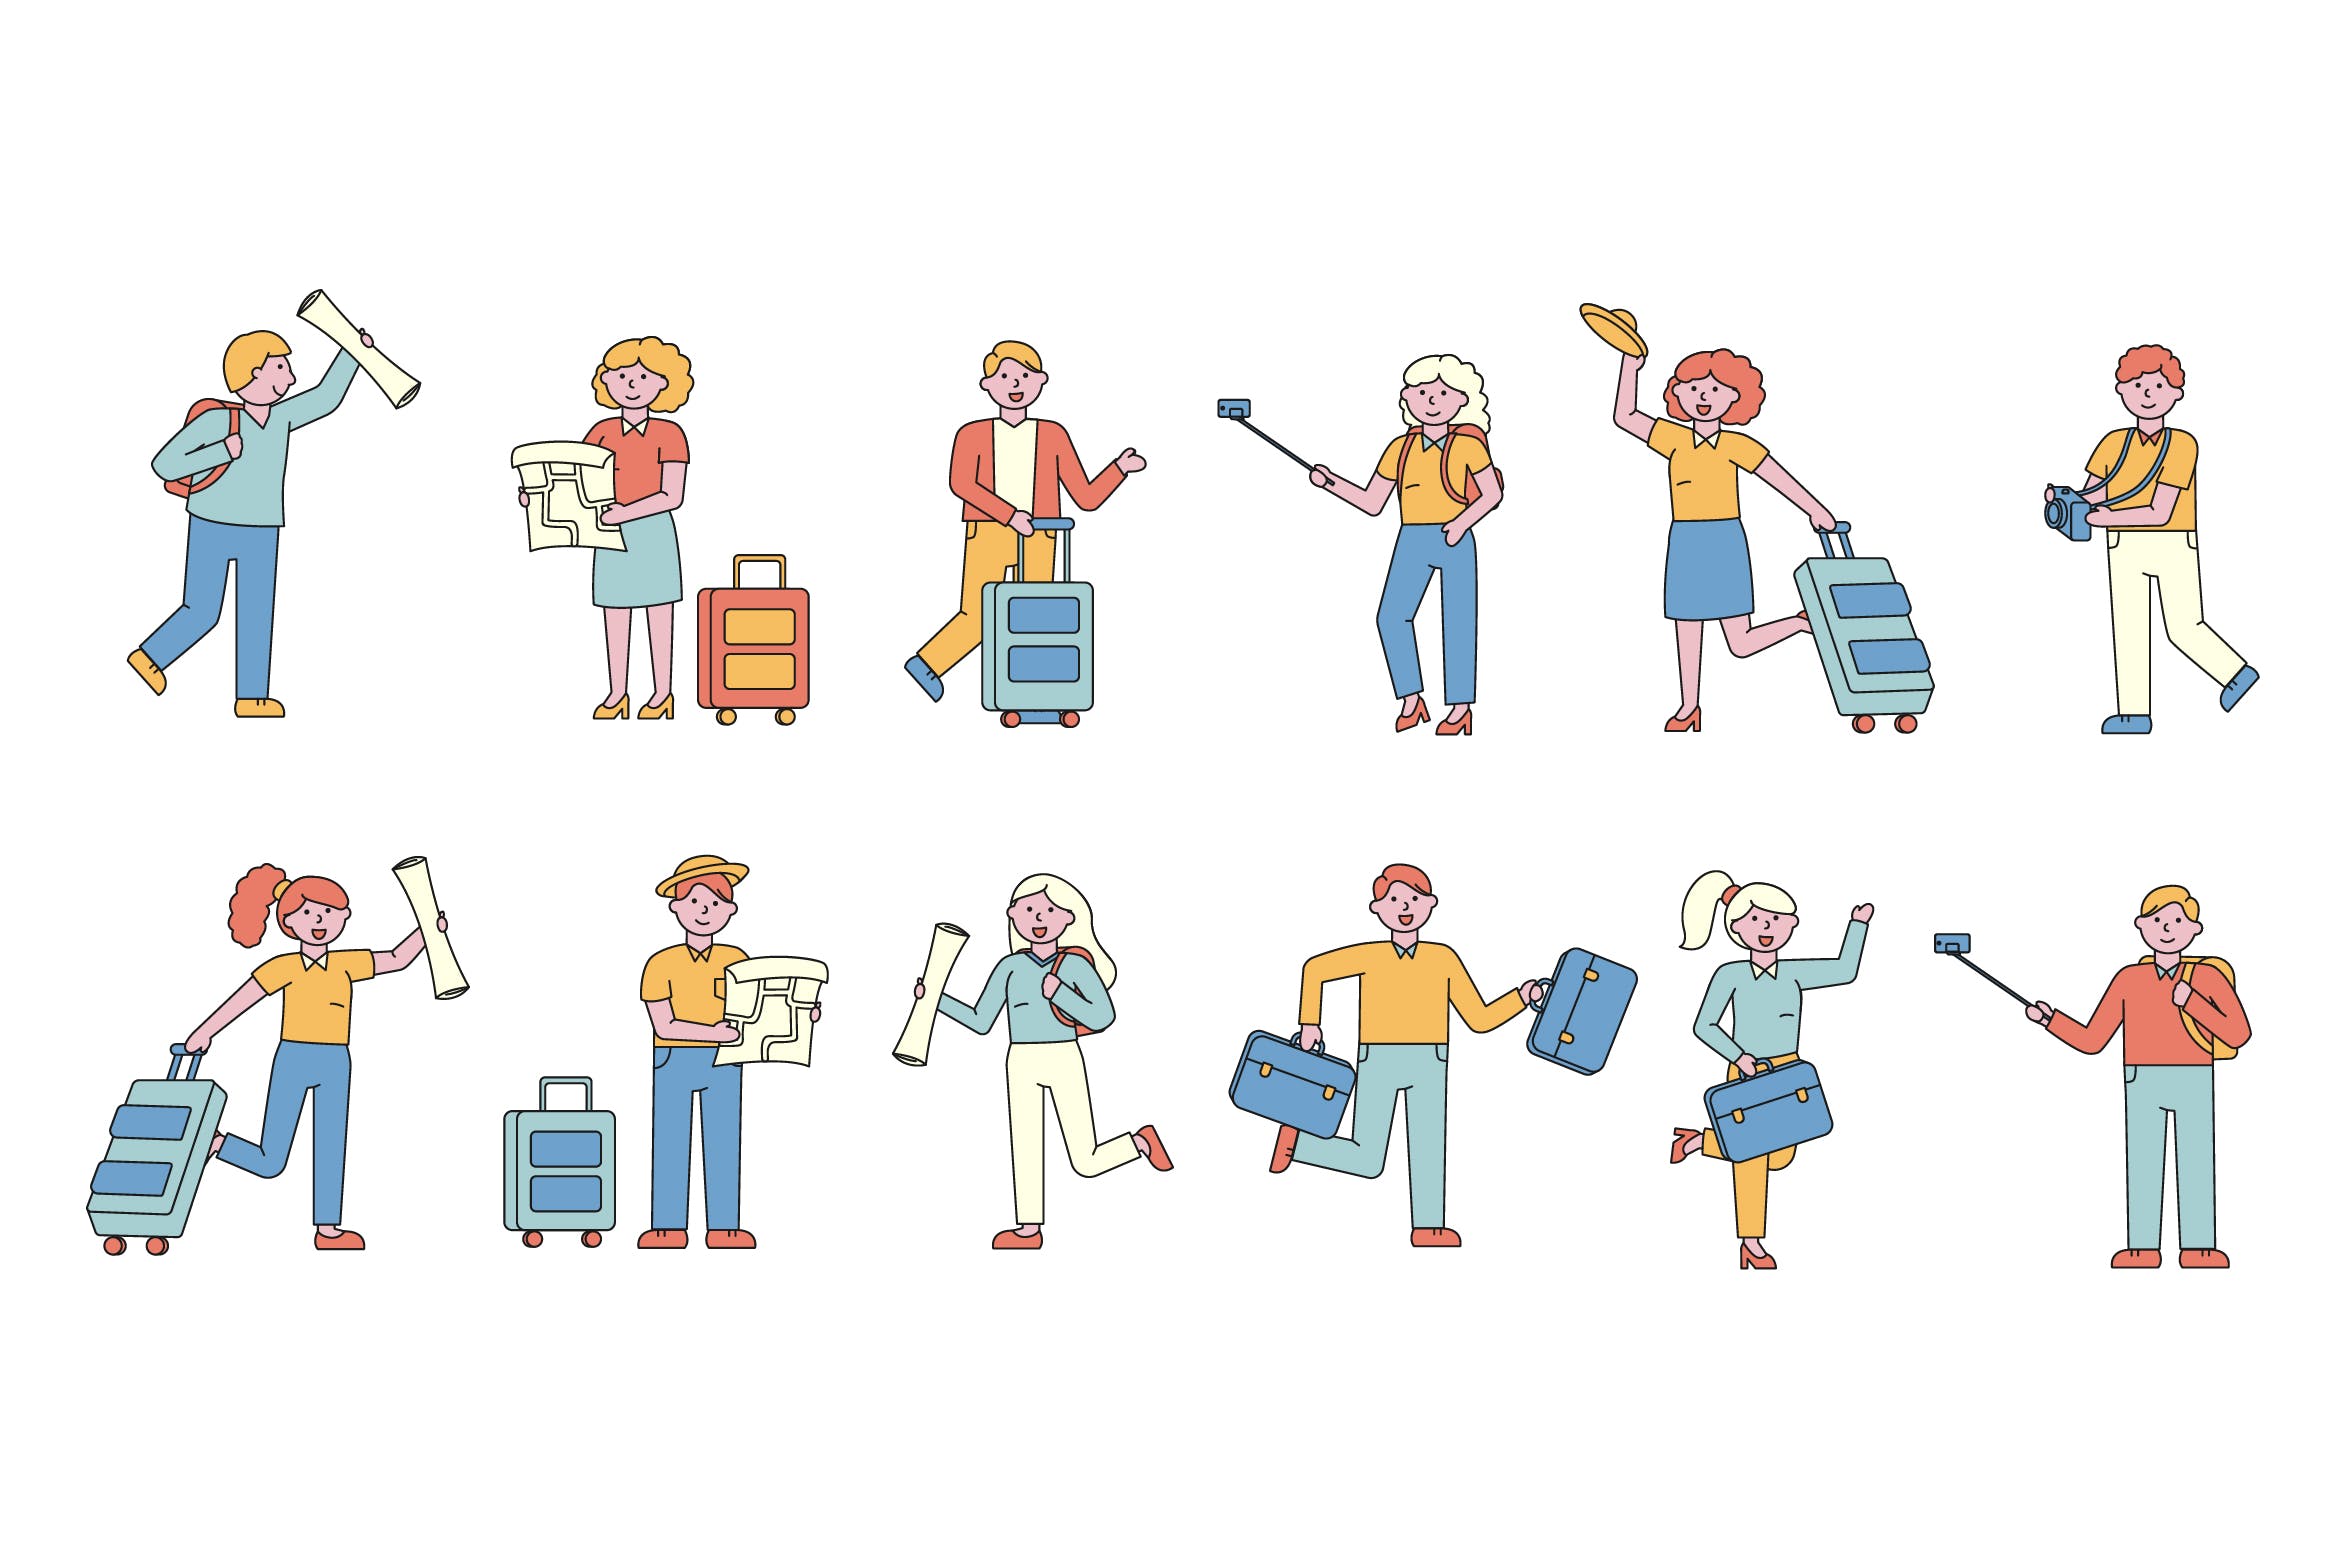 旅行人物形象线条艺术矢量插画素材库精选素材 Tourists Lineart People Character Collection插图